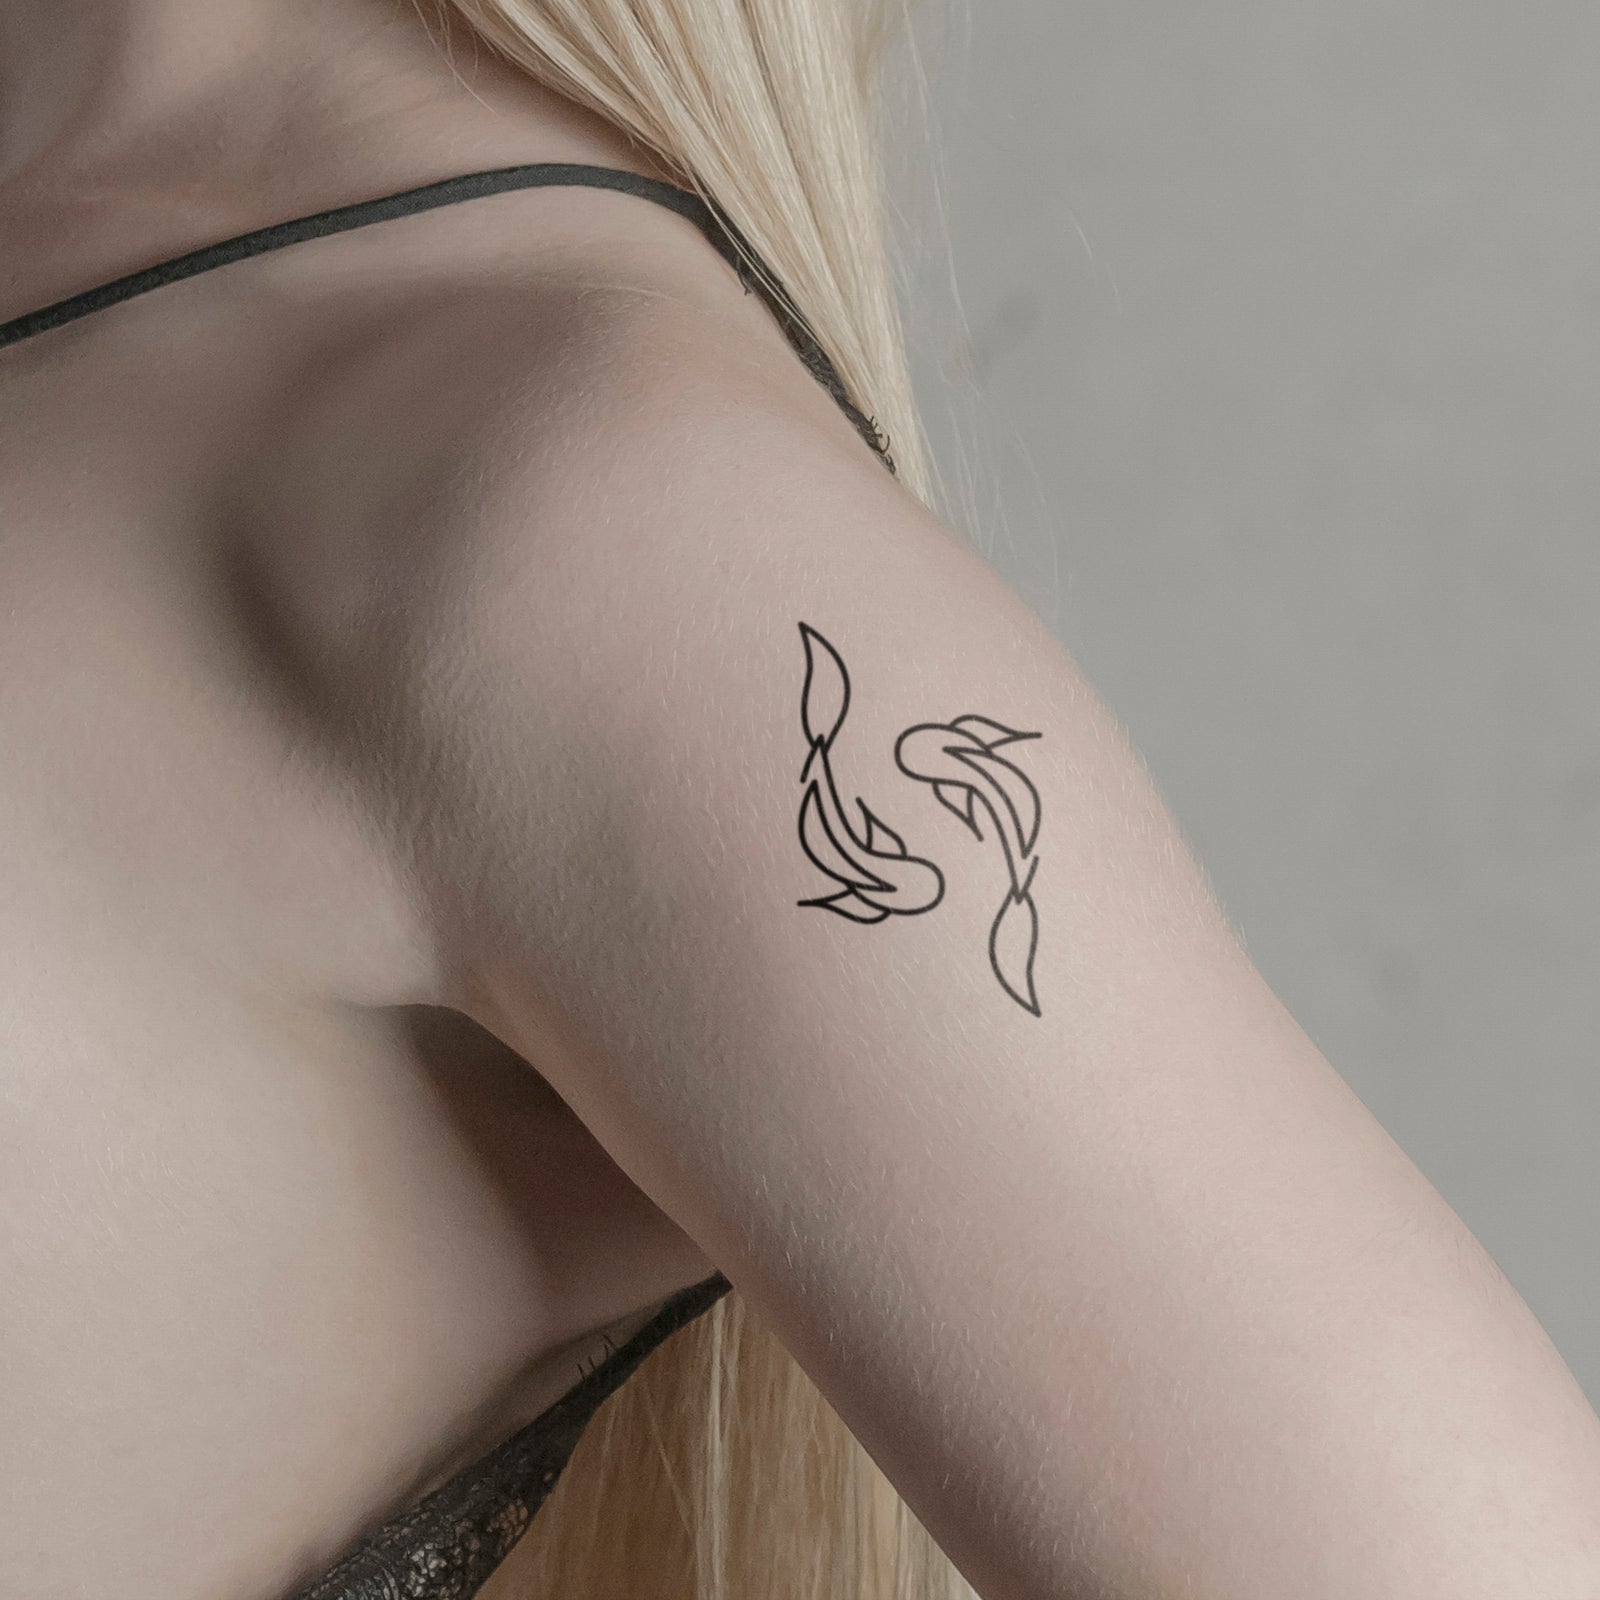 Who loves animal tattoos? 😍 : r/tattoo